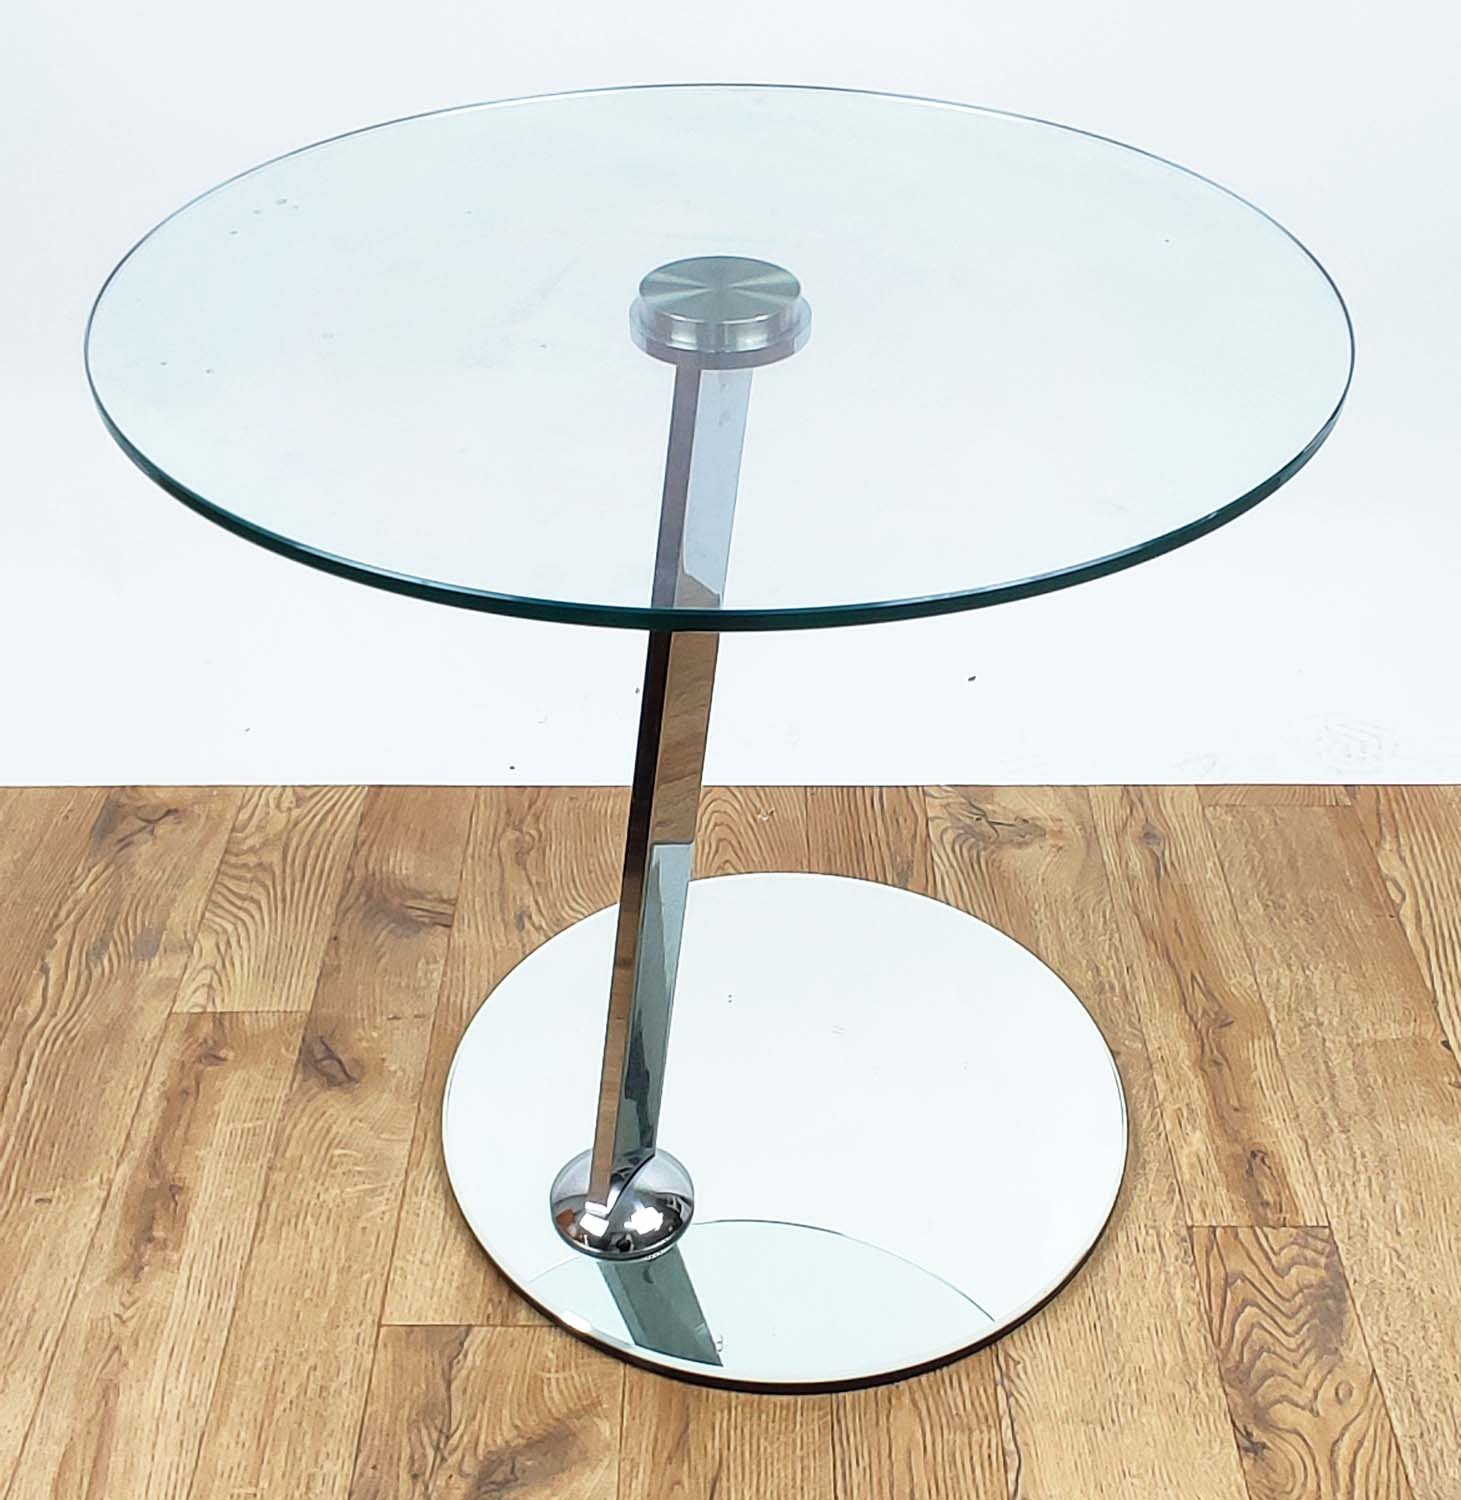 SIDE TABLE, contemporary design, mirrored base, glass top, 60cm diam x 55cm H.